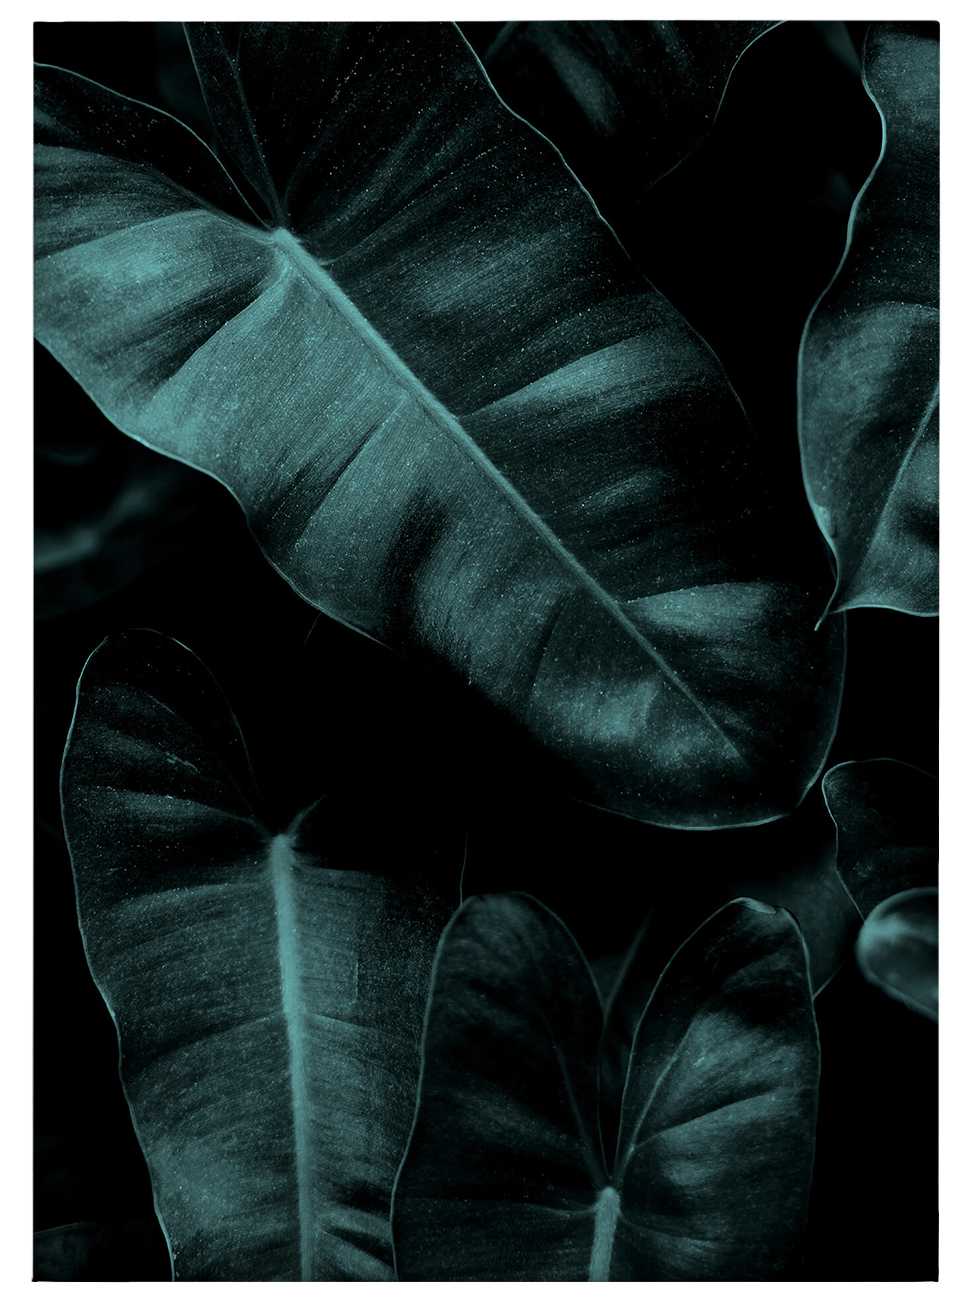             Kubstika Leinwandbild Blätter im Dschungeldesign – 0,50 m x 0,70 m
        